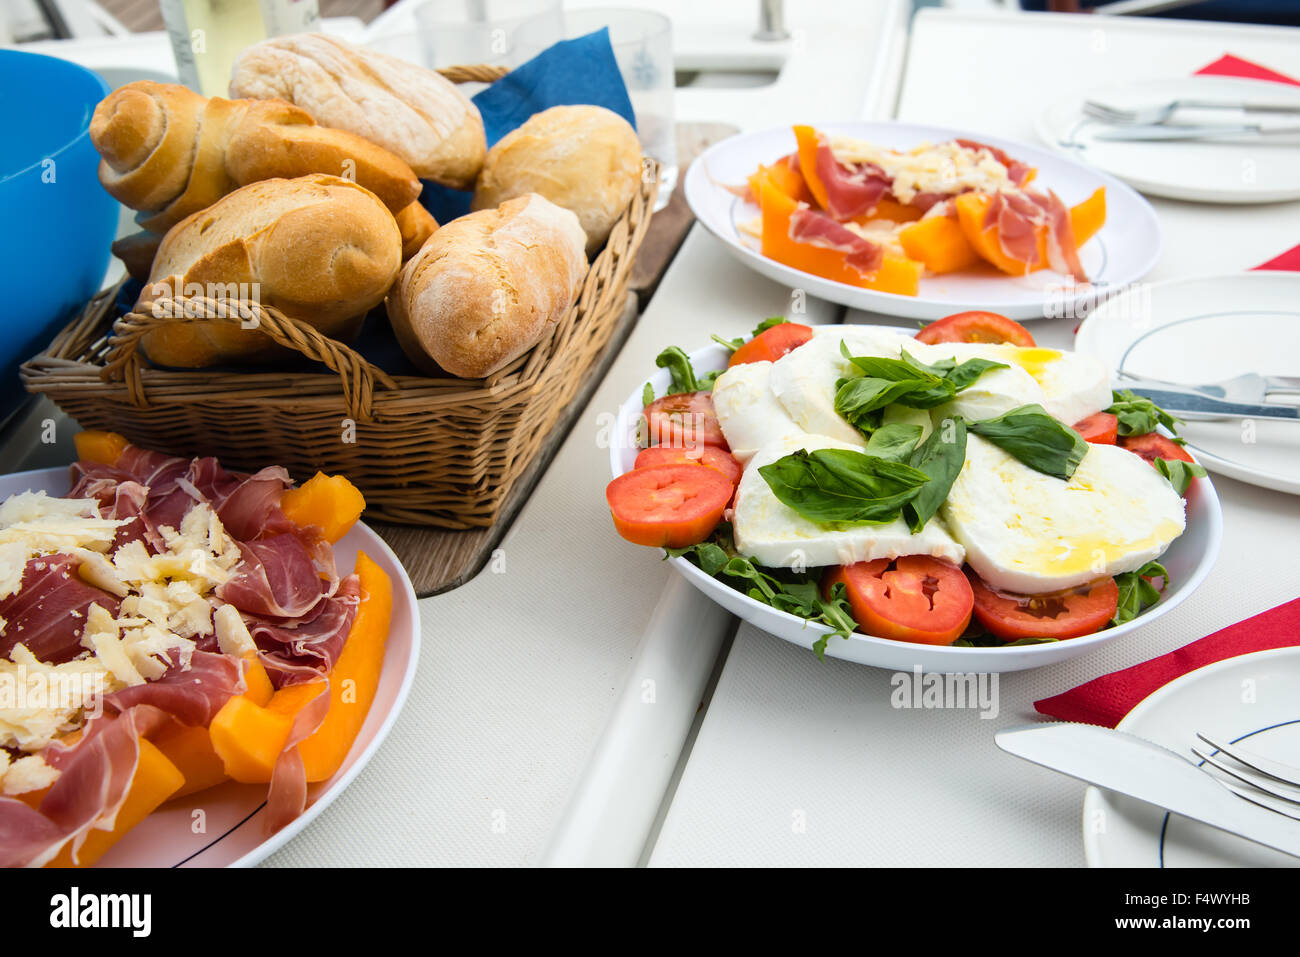 Insalata Caprese, salade de tomates et mozzarella italienne Banque D'Images